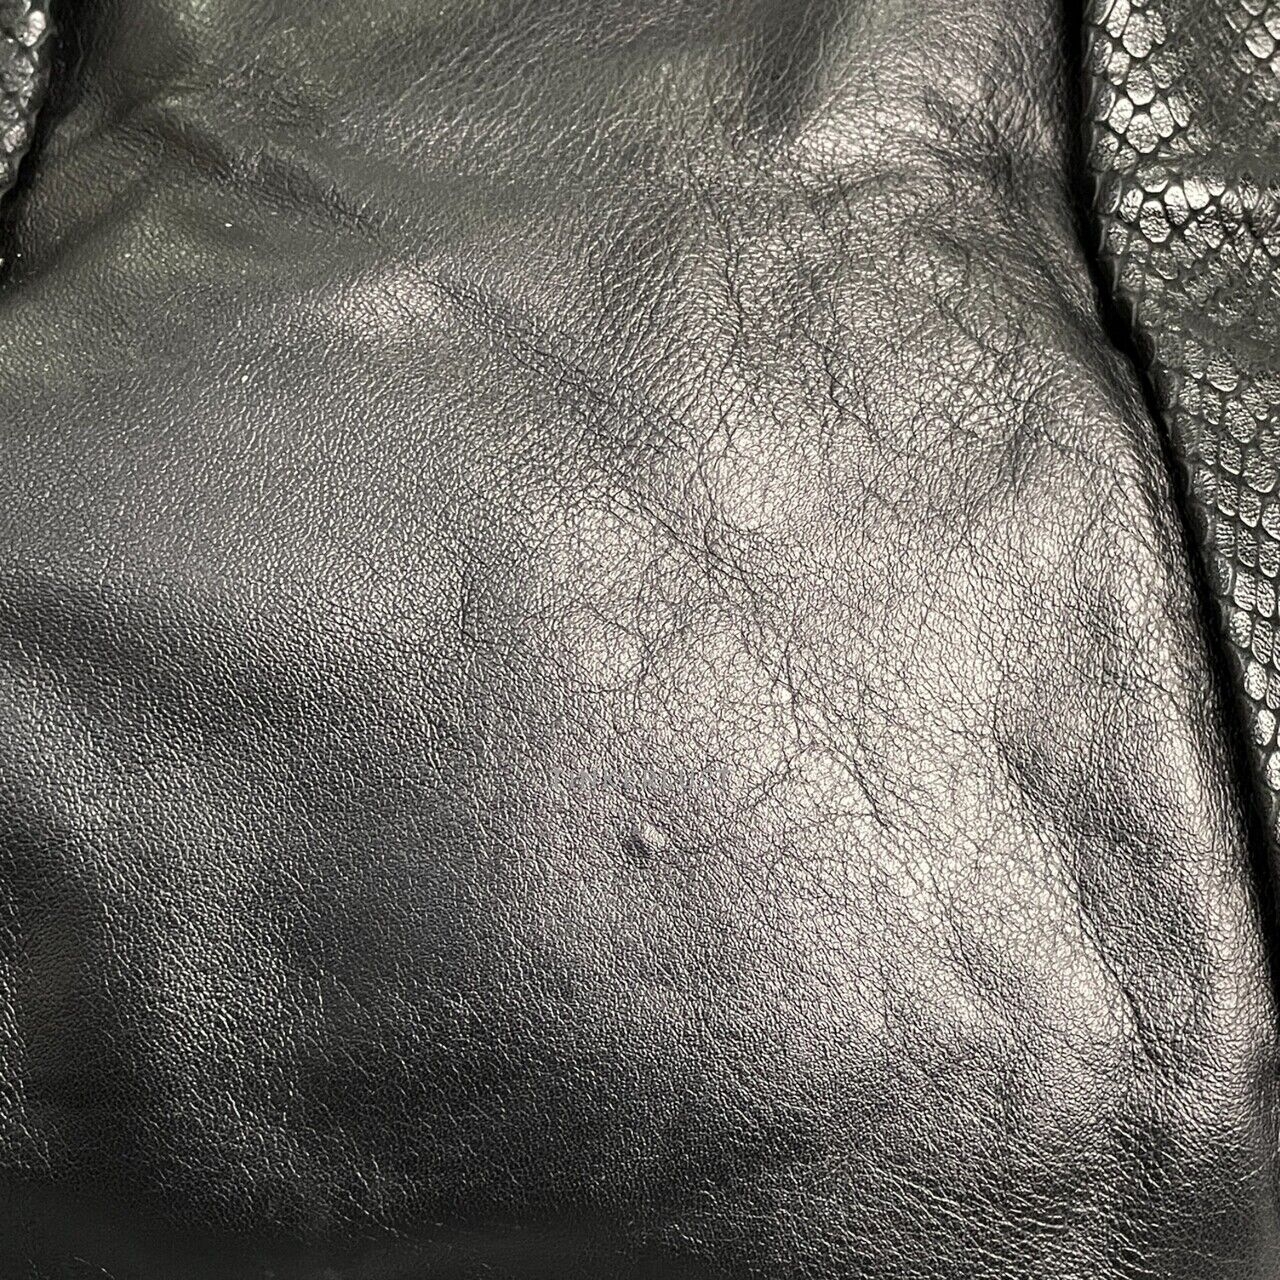 Braun Buffel Black Shoulder Bag